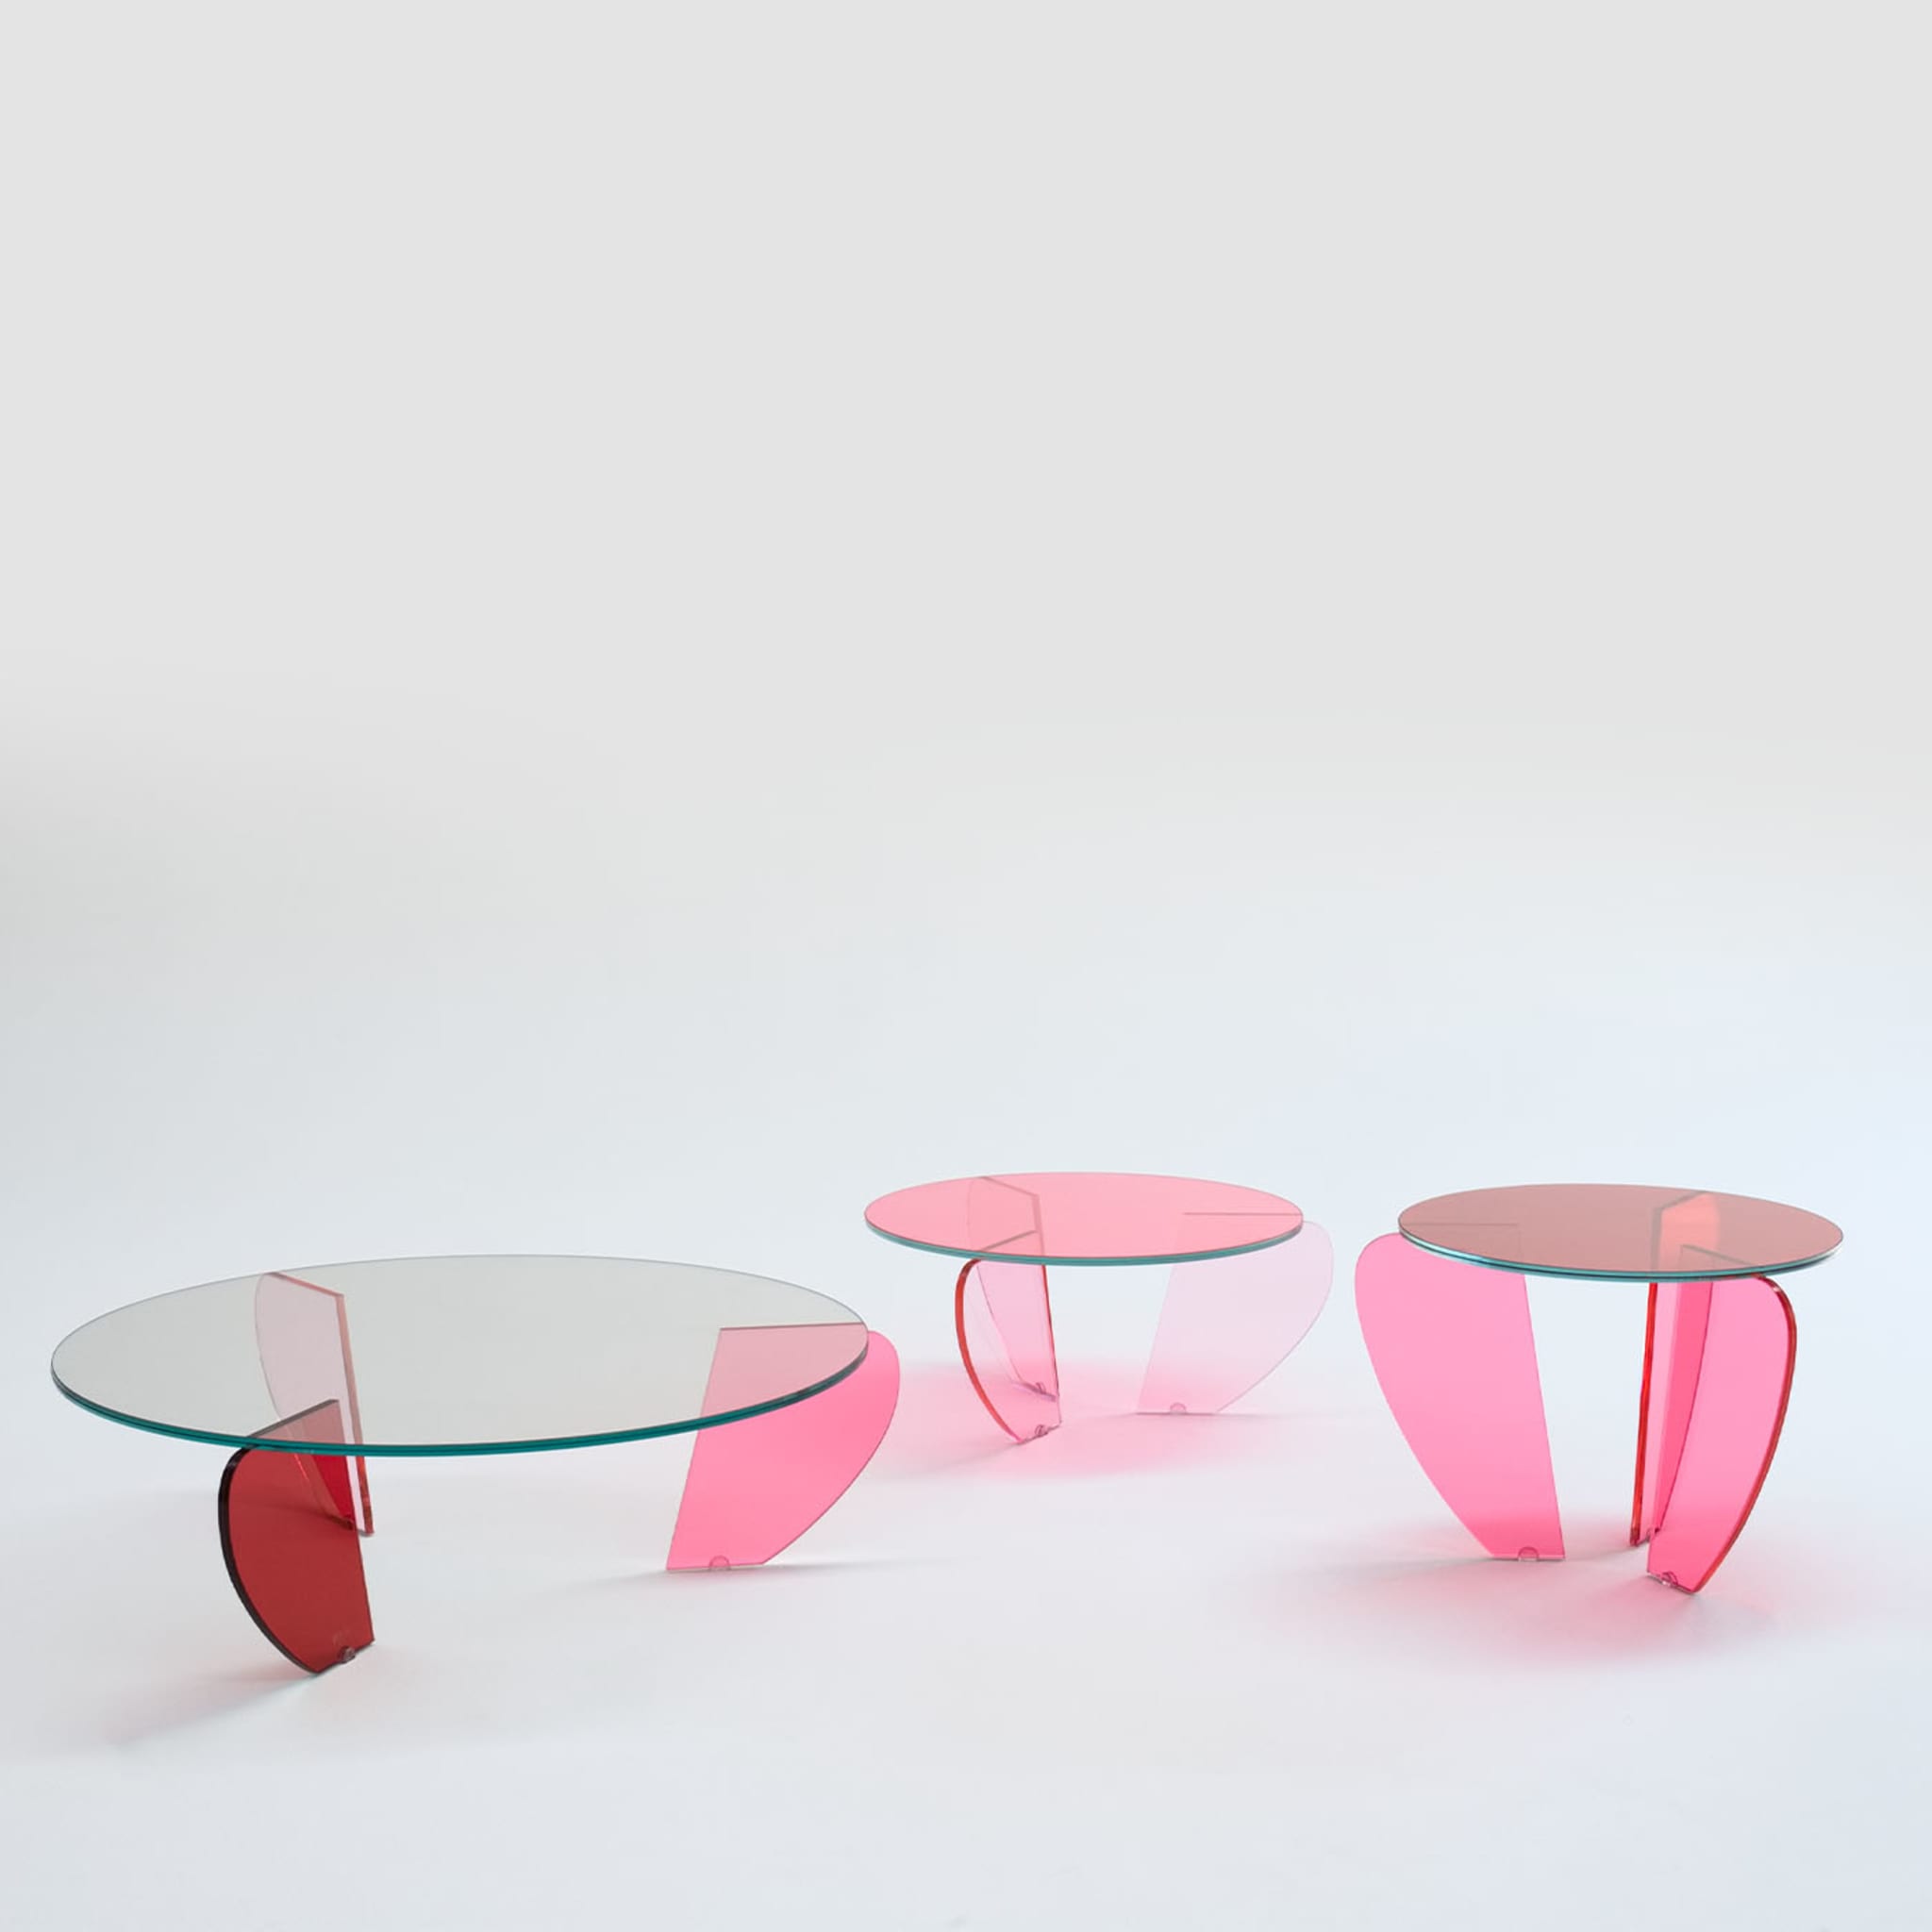 Teo Small Colored Side Table by Andrea Petterini - Alternative view 3